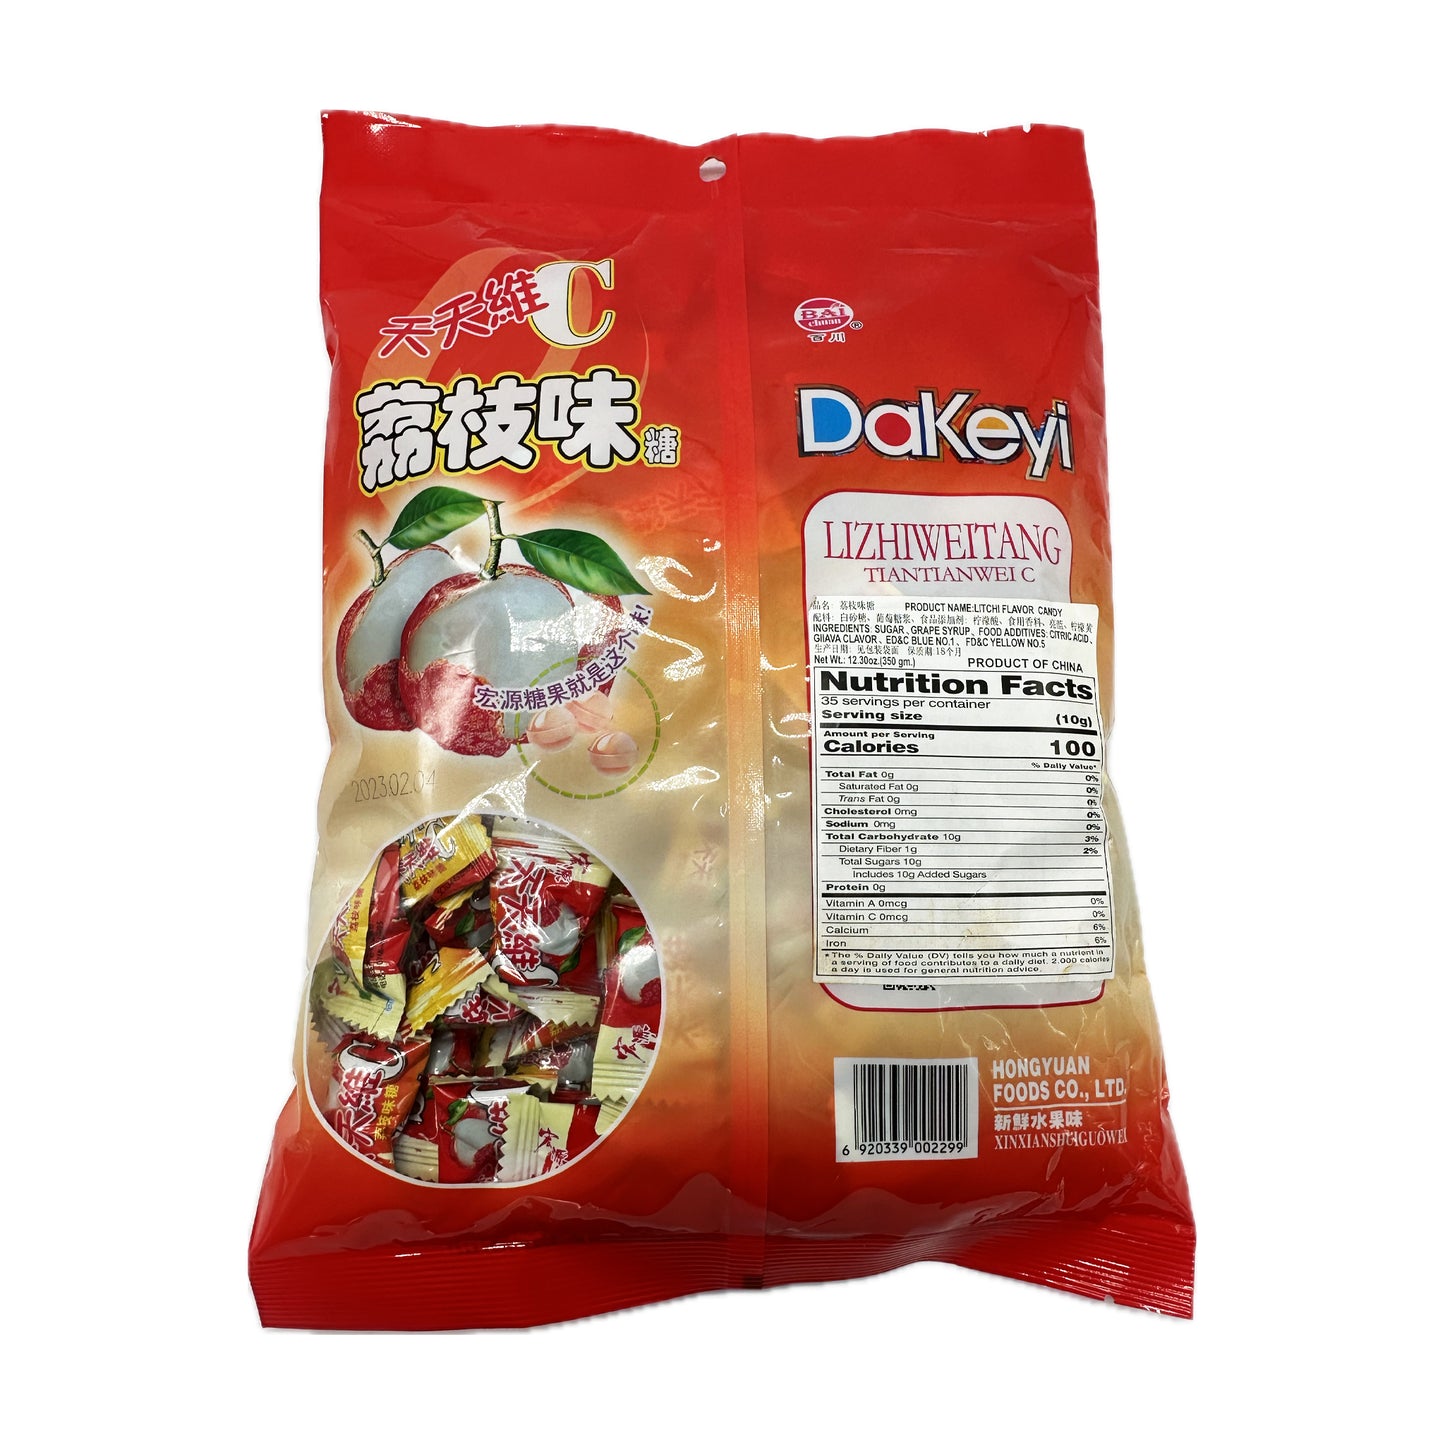 Hong Yuan Food Classic Hard Lychee (Litchi) Flavor Candy Dakeyi - 350g